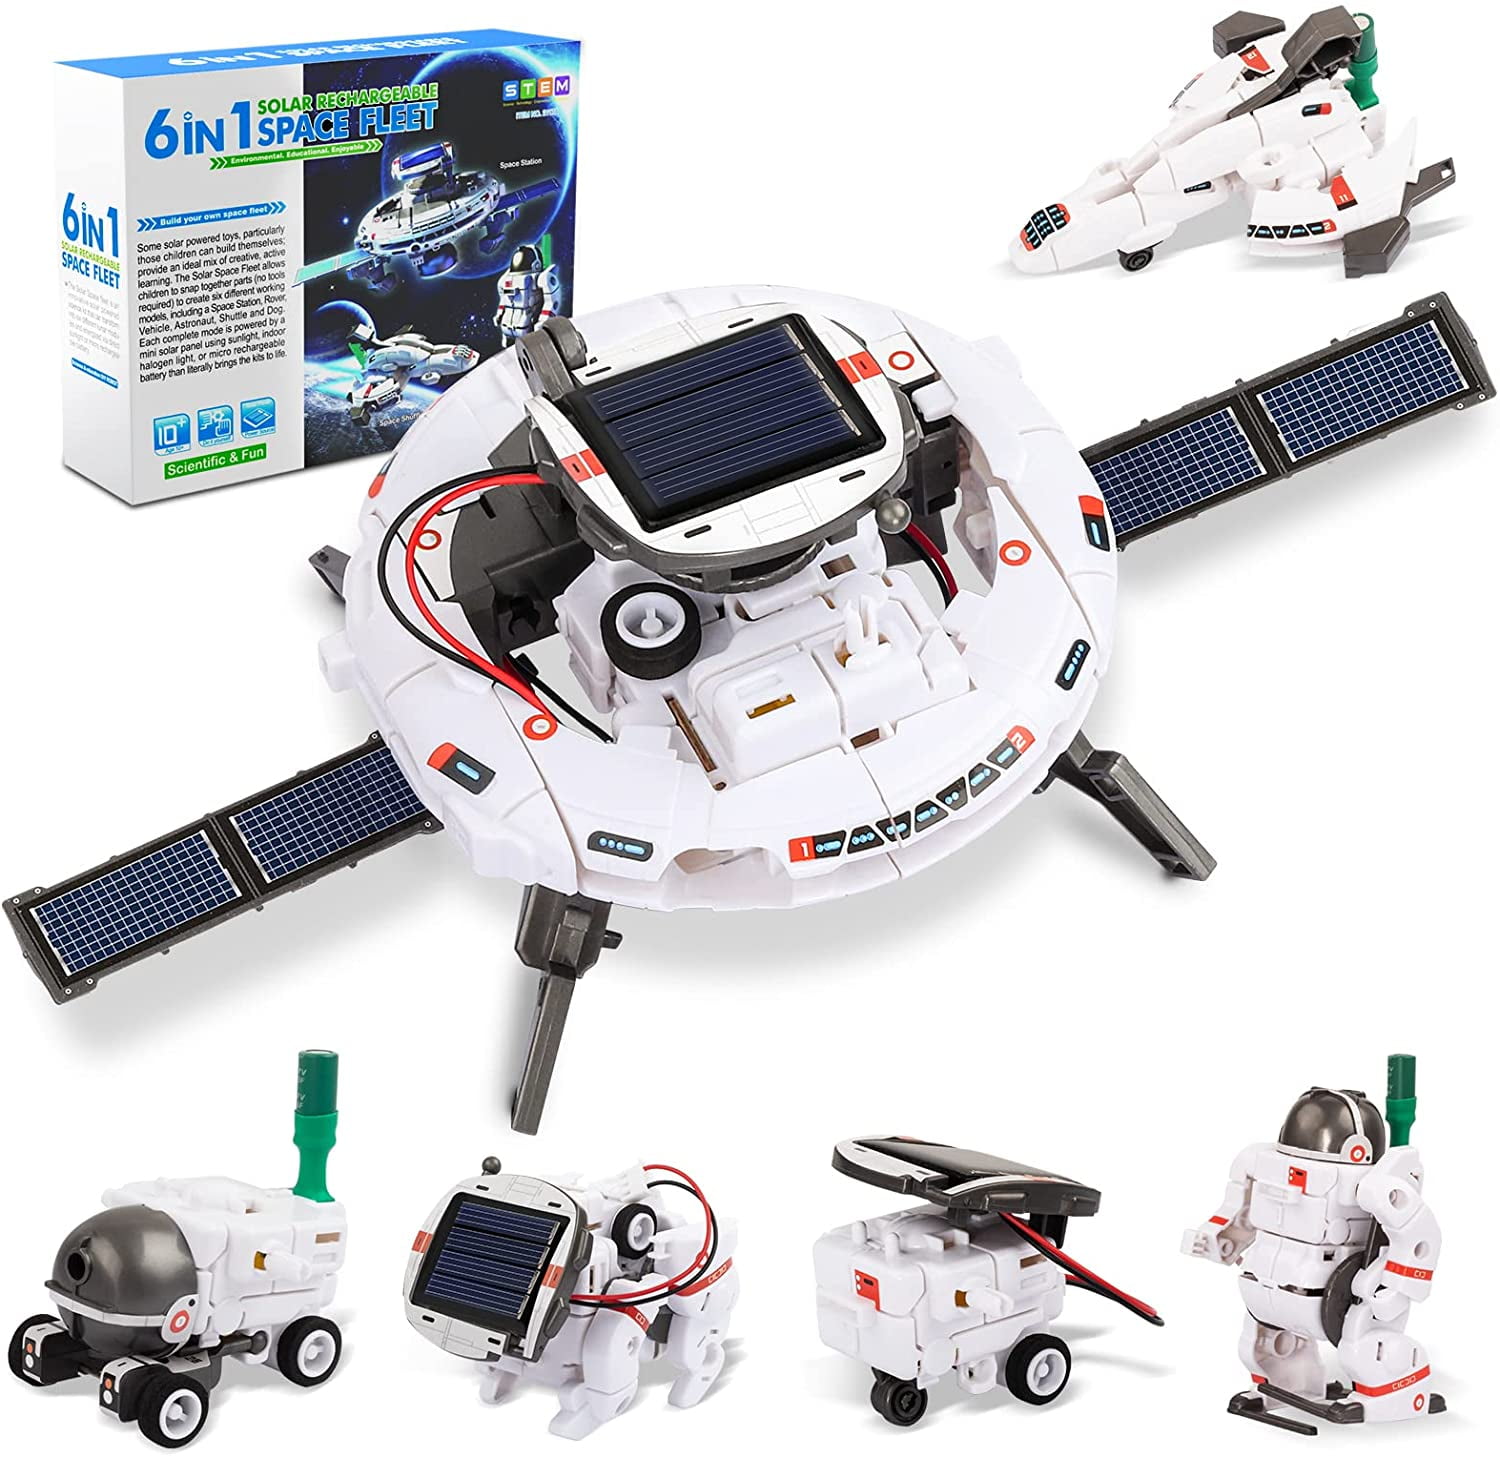 HISTOYE STEM Solar Robot Kit For Kids 6 7 8 9 10 11 12,Robotics For Kids  Ages 8-12,12-In-1 Stem Projects For Kids,Gift Toys For 6 7 8 9 10 11 12  Year Old Boys Girls Color Random